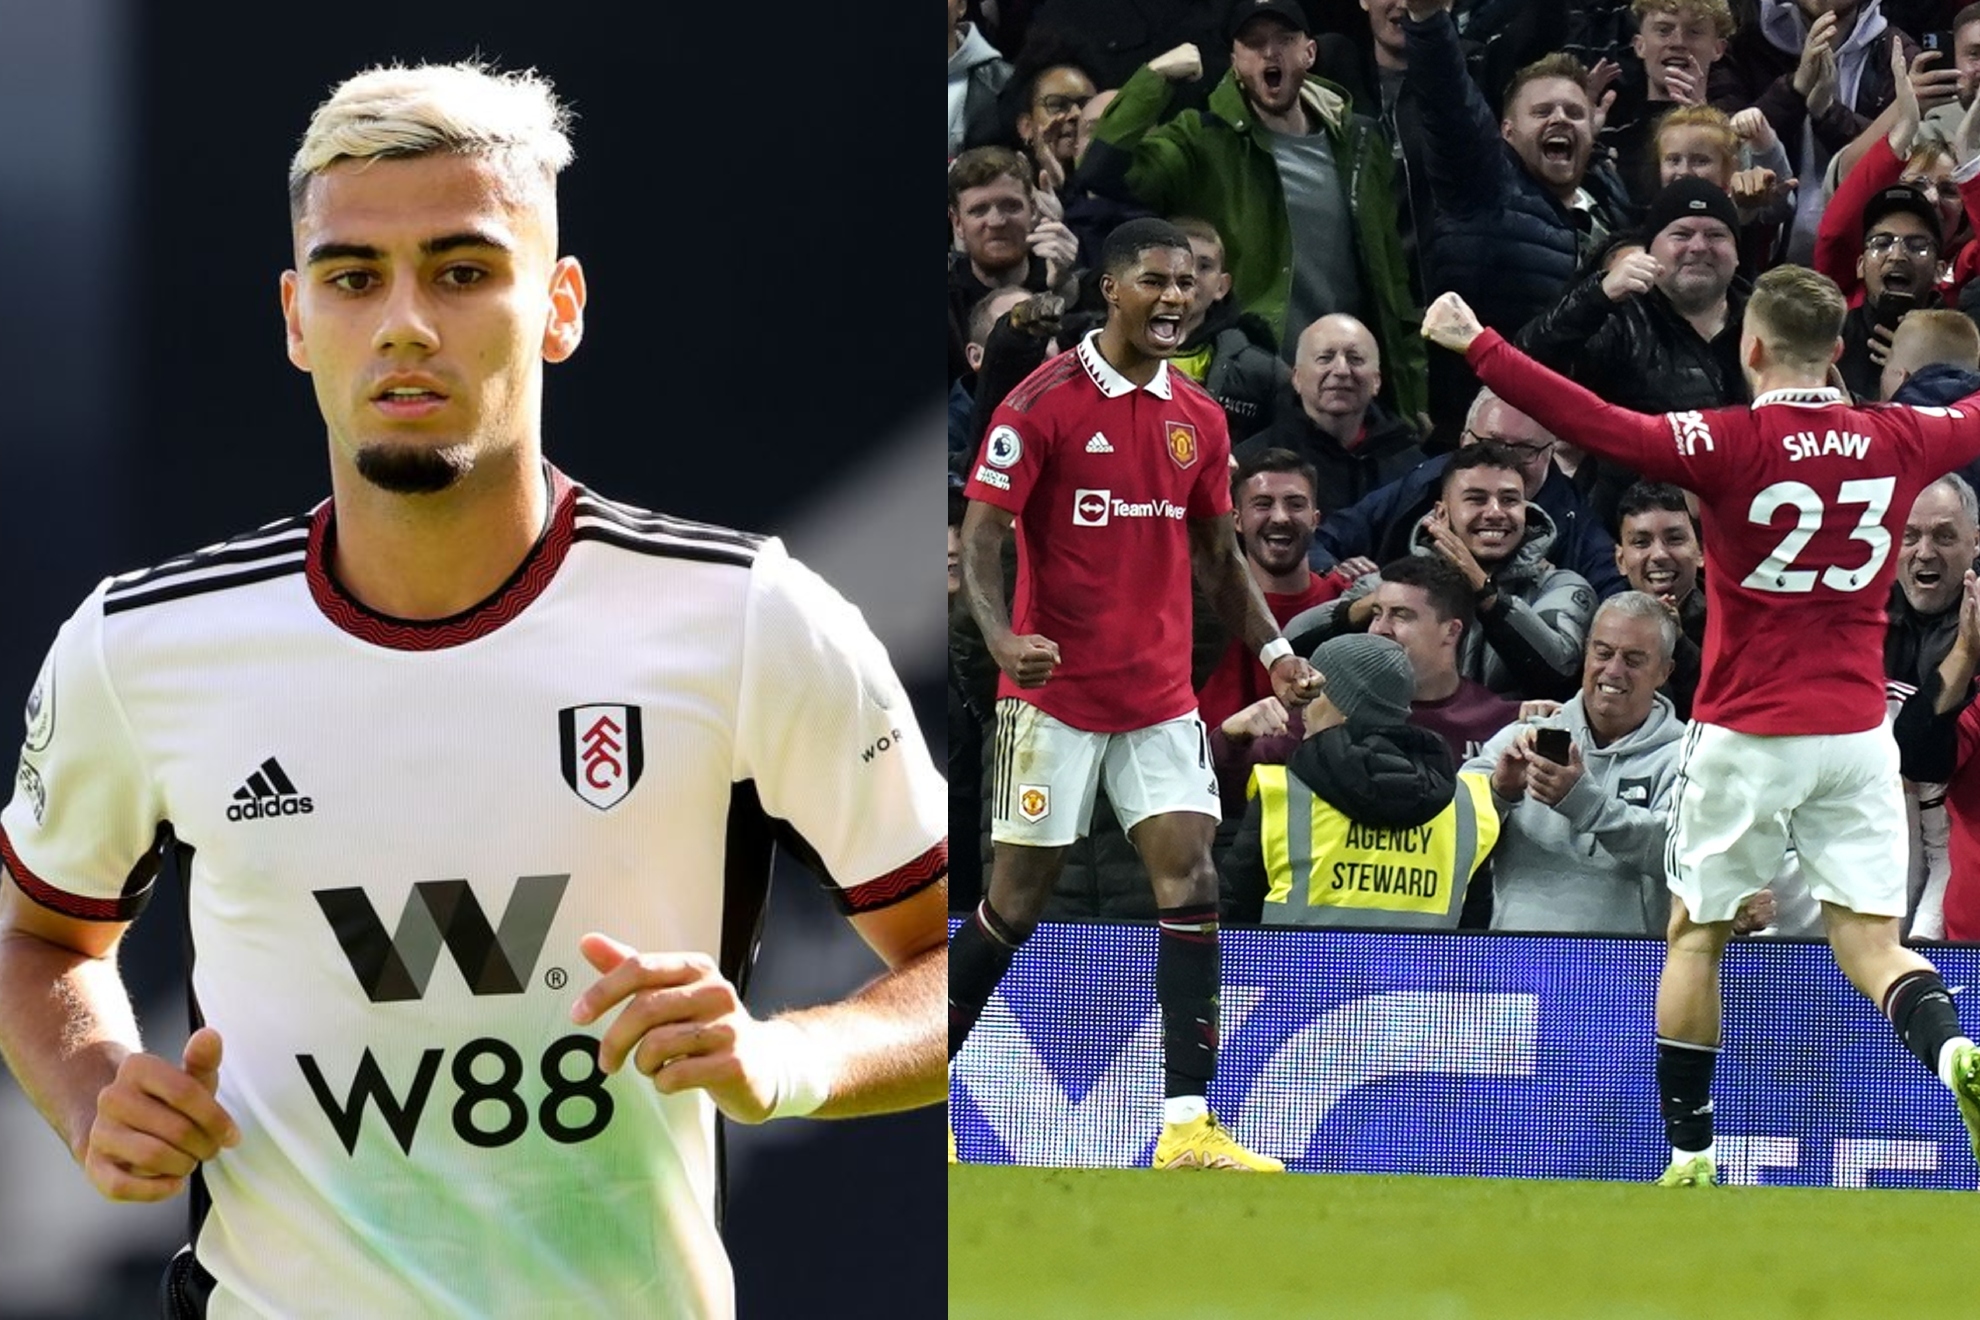 Fulham - Manchester United: resumen, resultado y goles